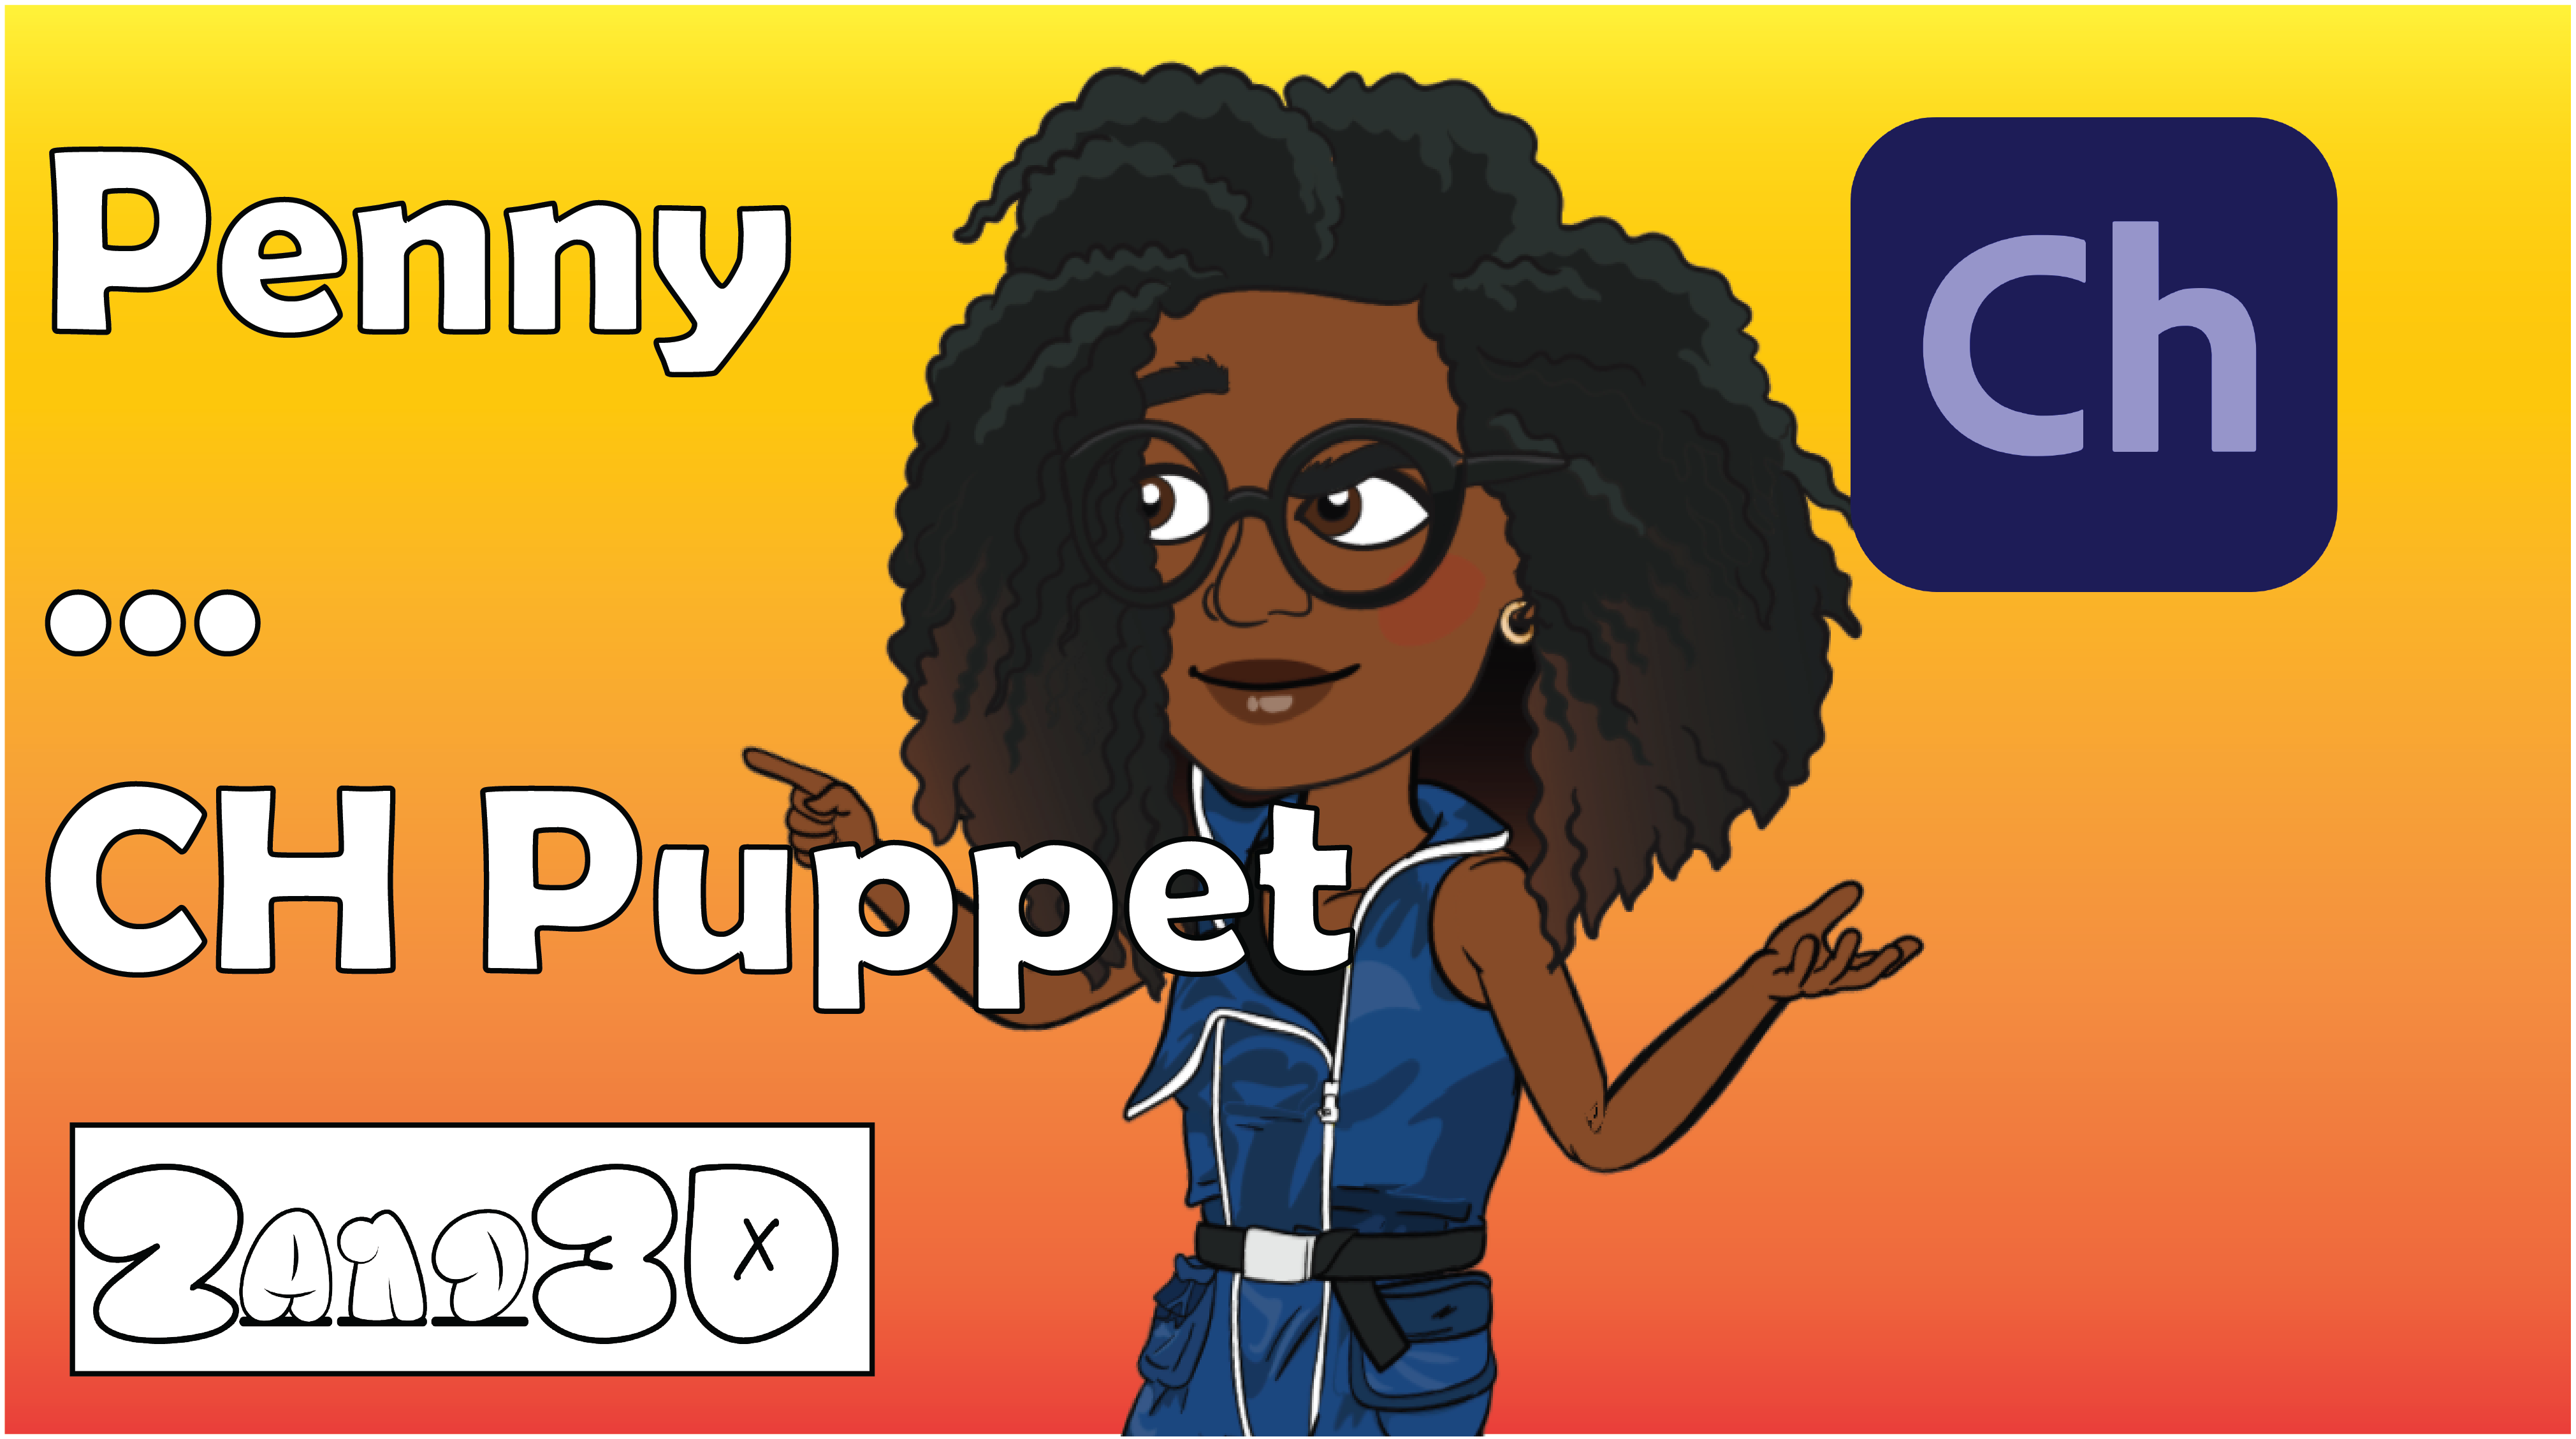 Penny Adobe CH Puppet (Adobe Character Animator Puppet) Adobe Character Animator Puppet Adobe Ch Puppet